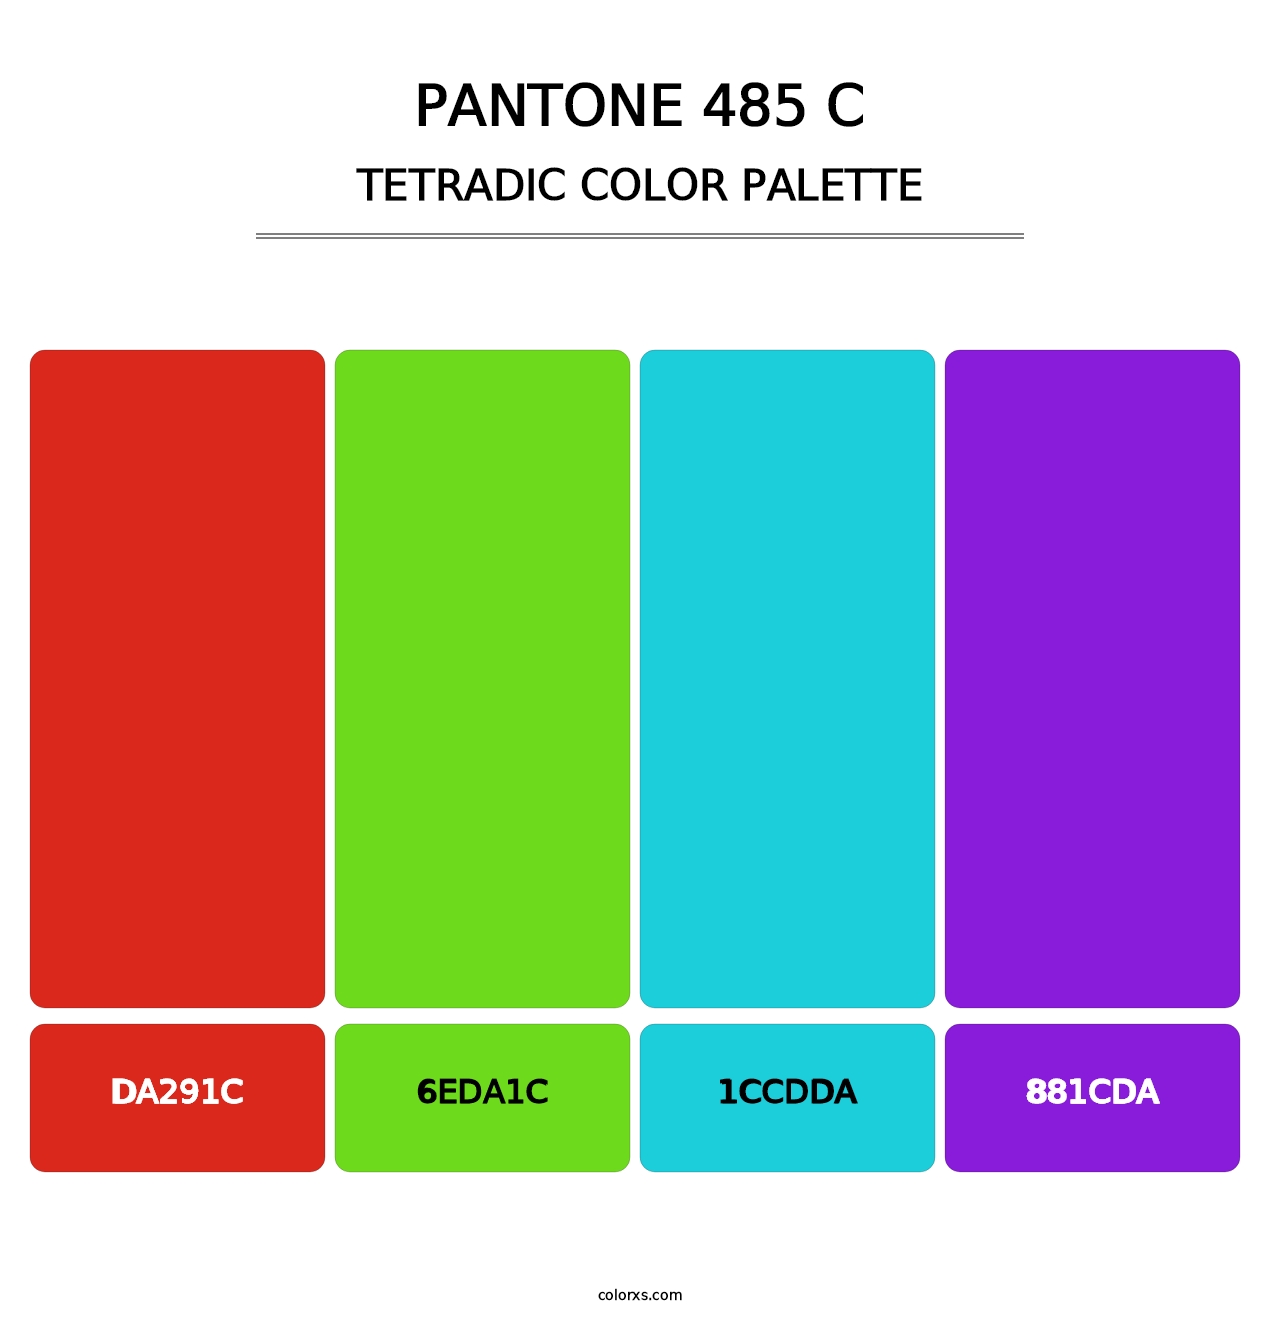 PANTONE 485 C - Tetradic Color Palette